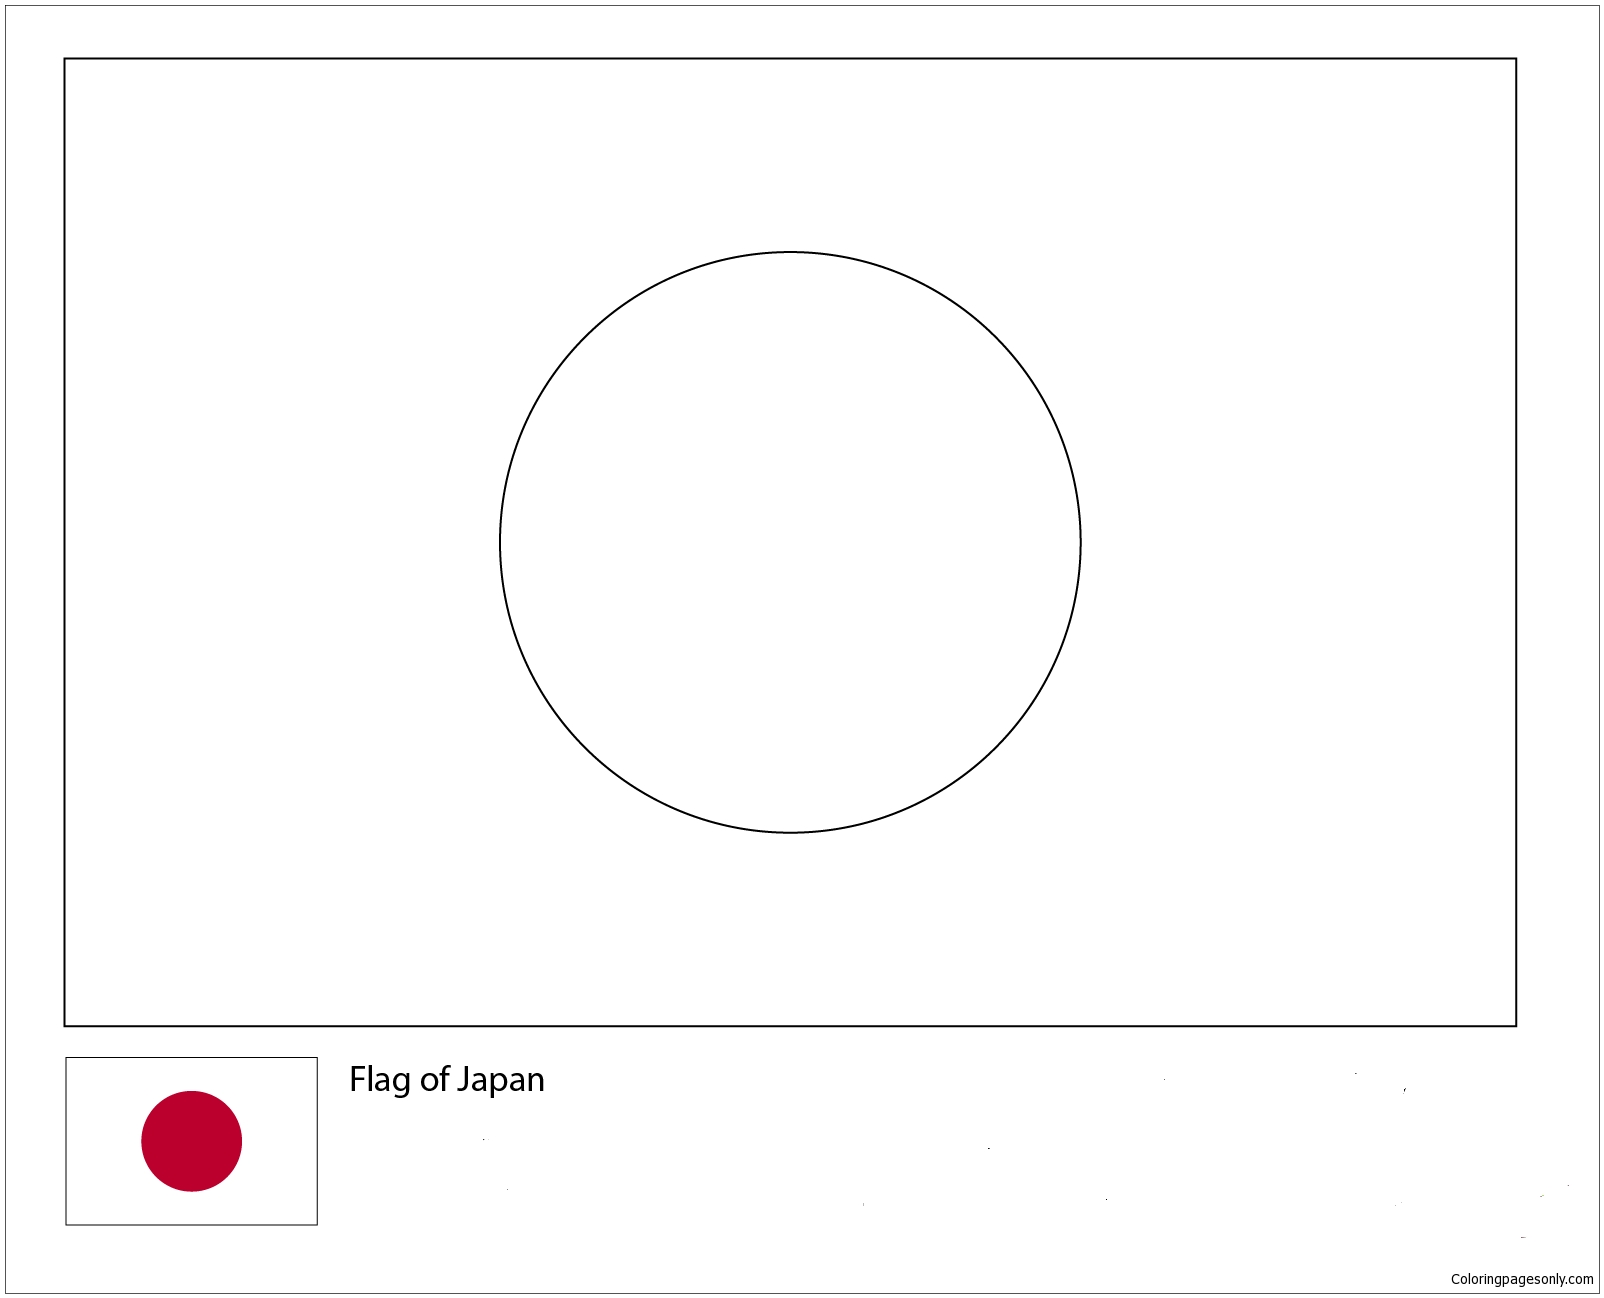 Раскраска Чемпионат мира по футболу 2018 года с флагом Японии